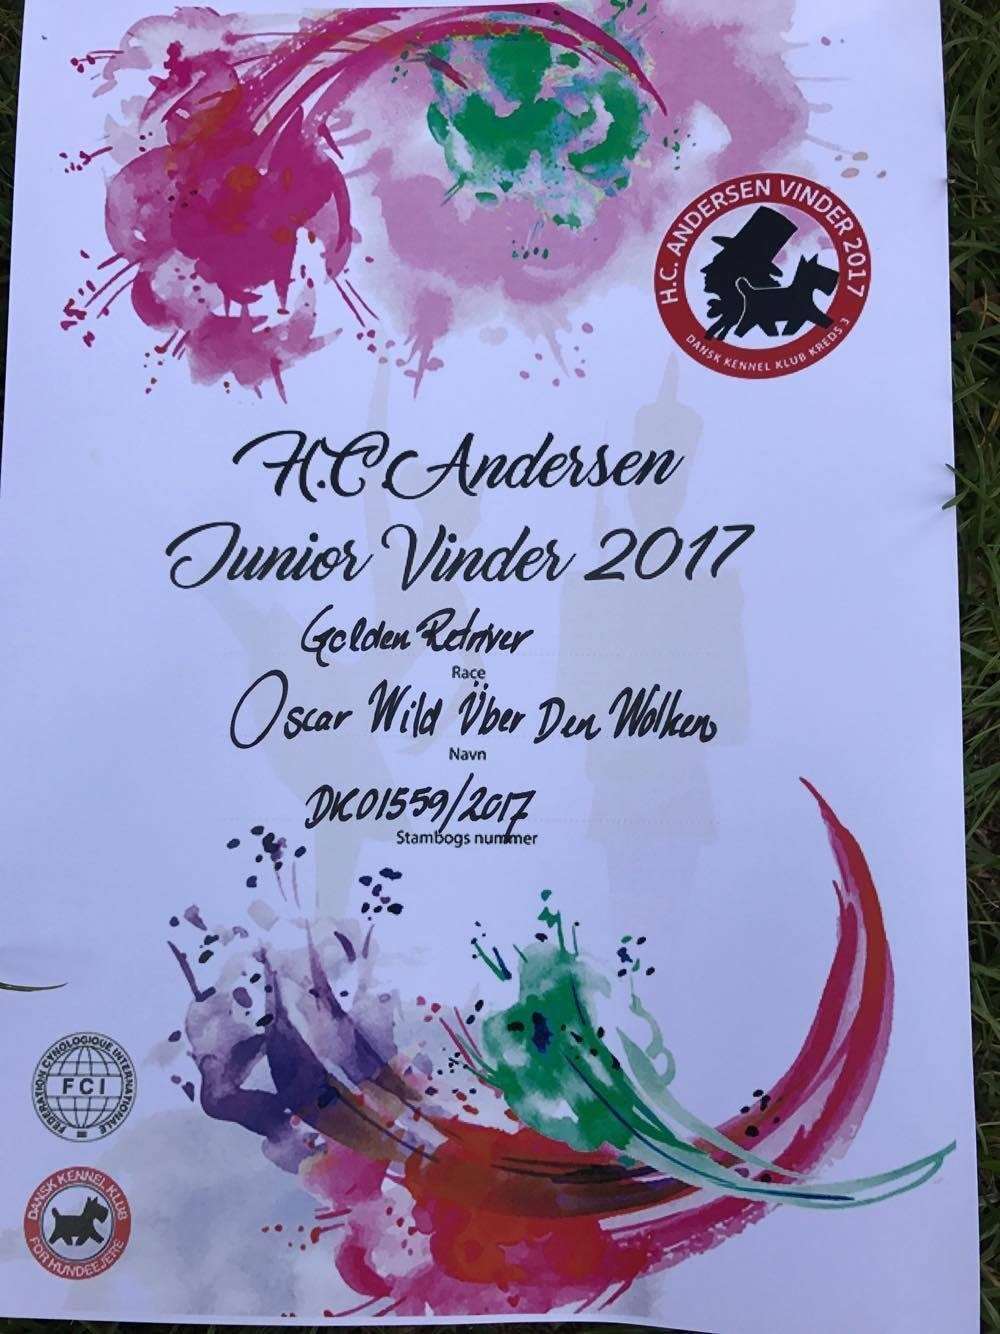 hc-andersen-junior-vinder-2017-diplom_3438